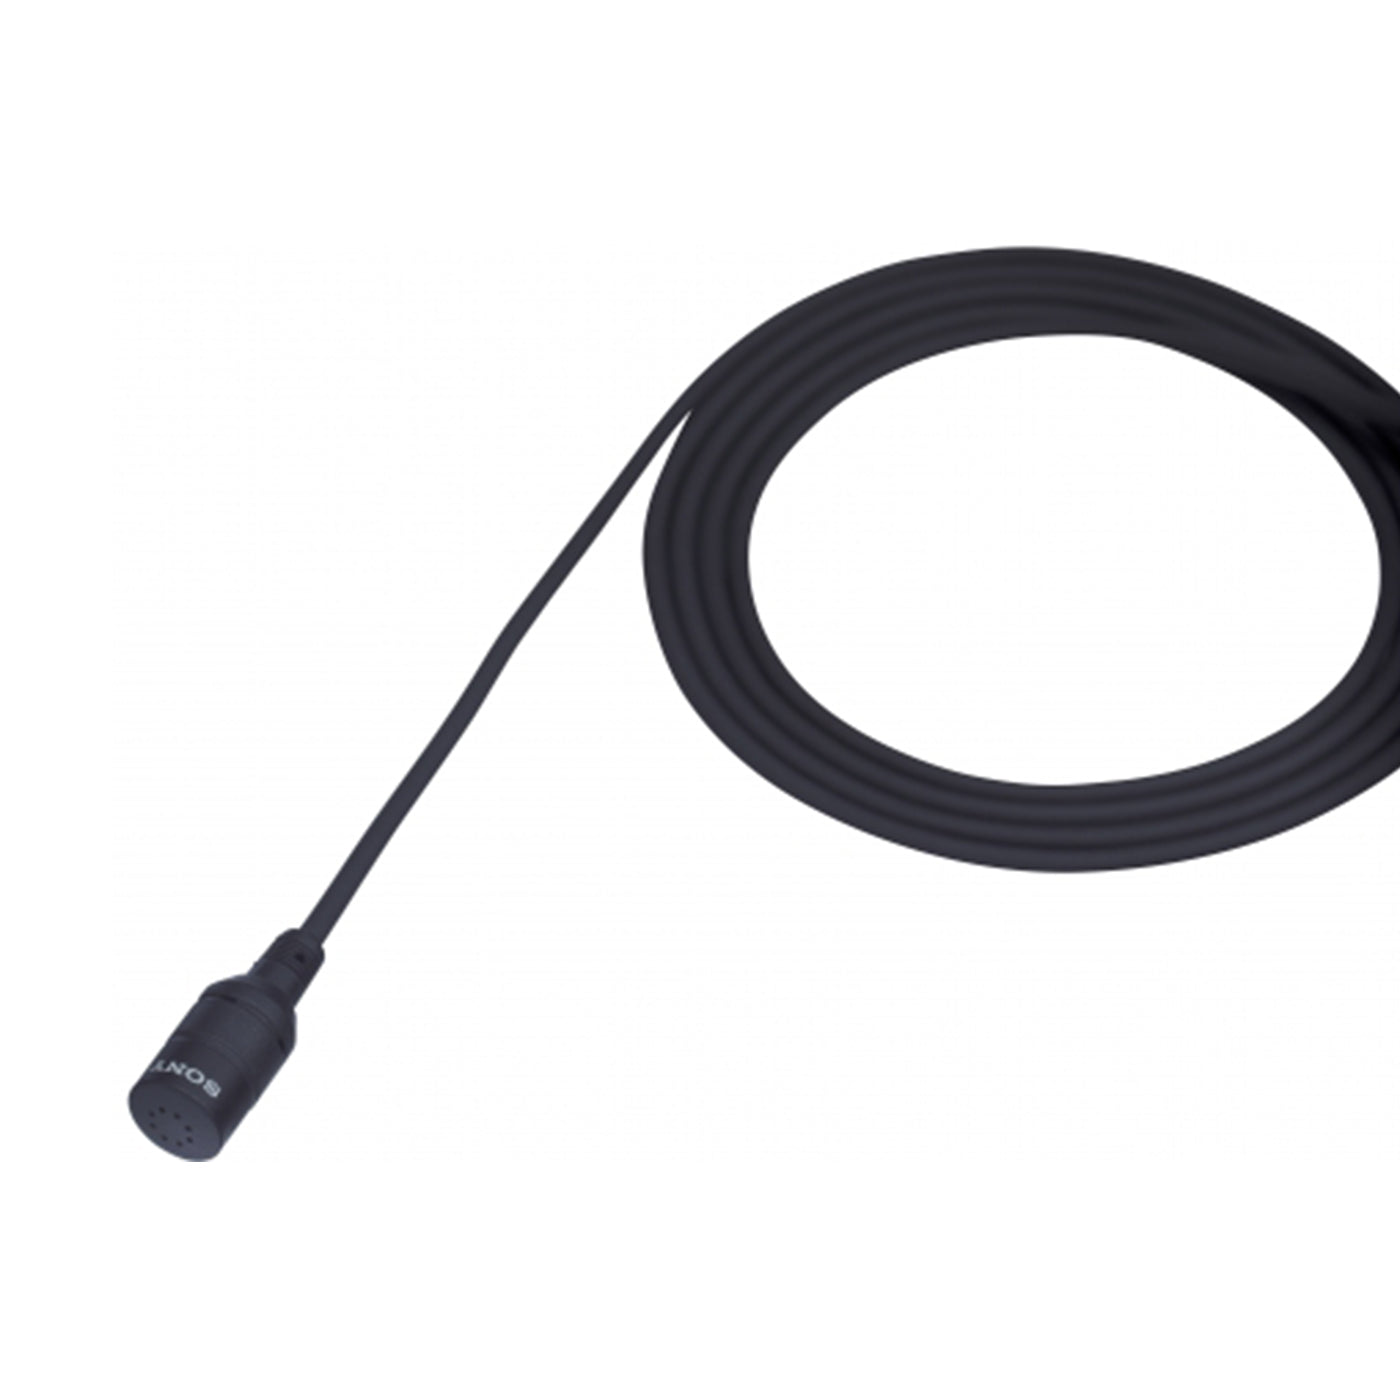 ECM-44B - Affordable omni-directional lavalier Electret condenser microphone